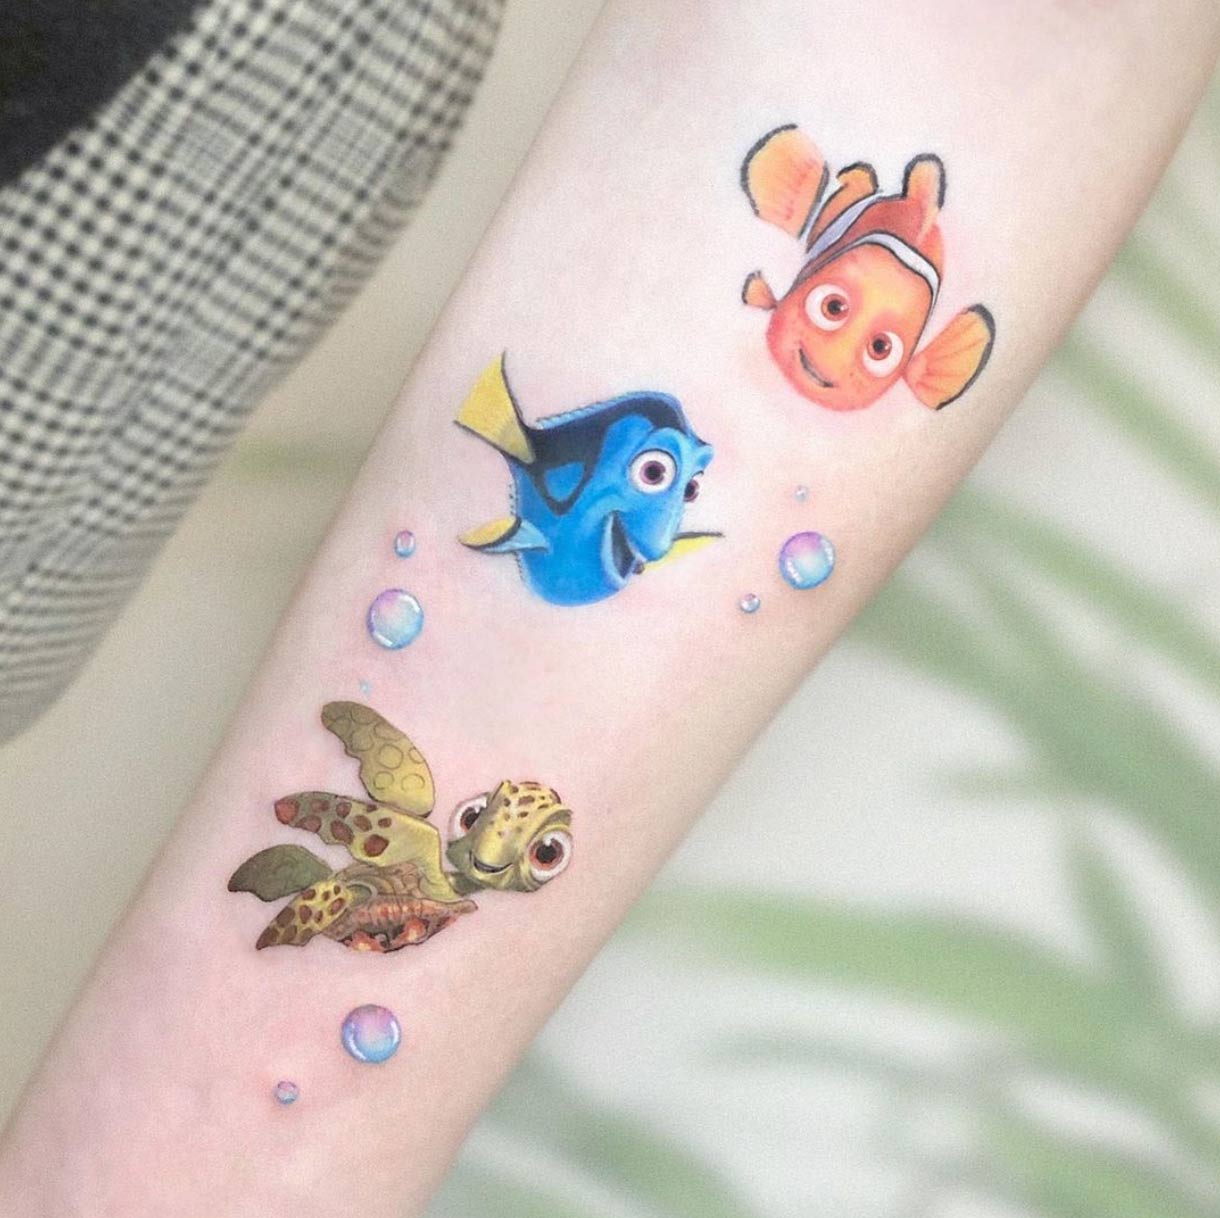 Finding Nemo tattoos